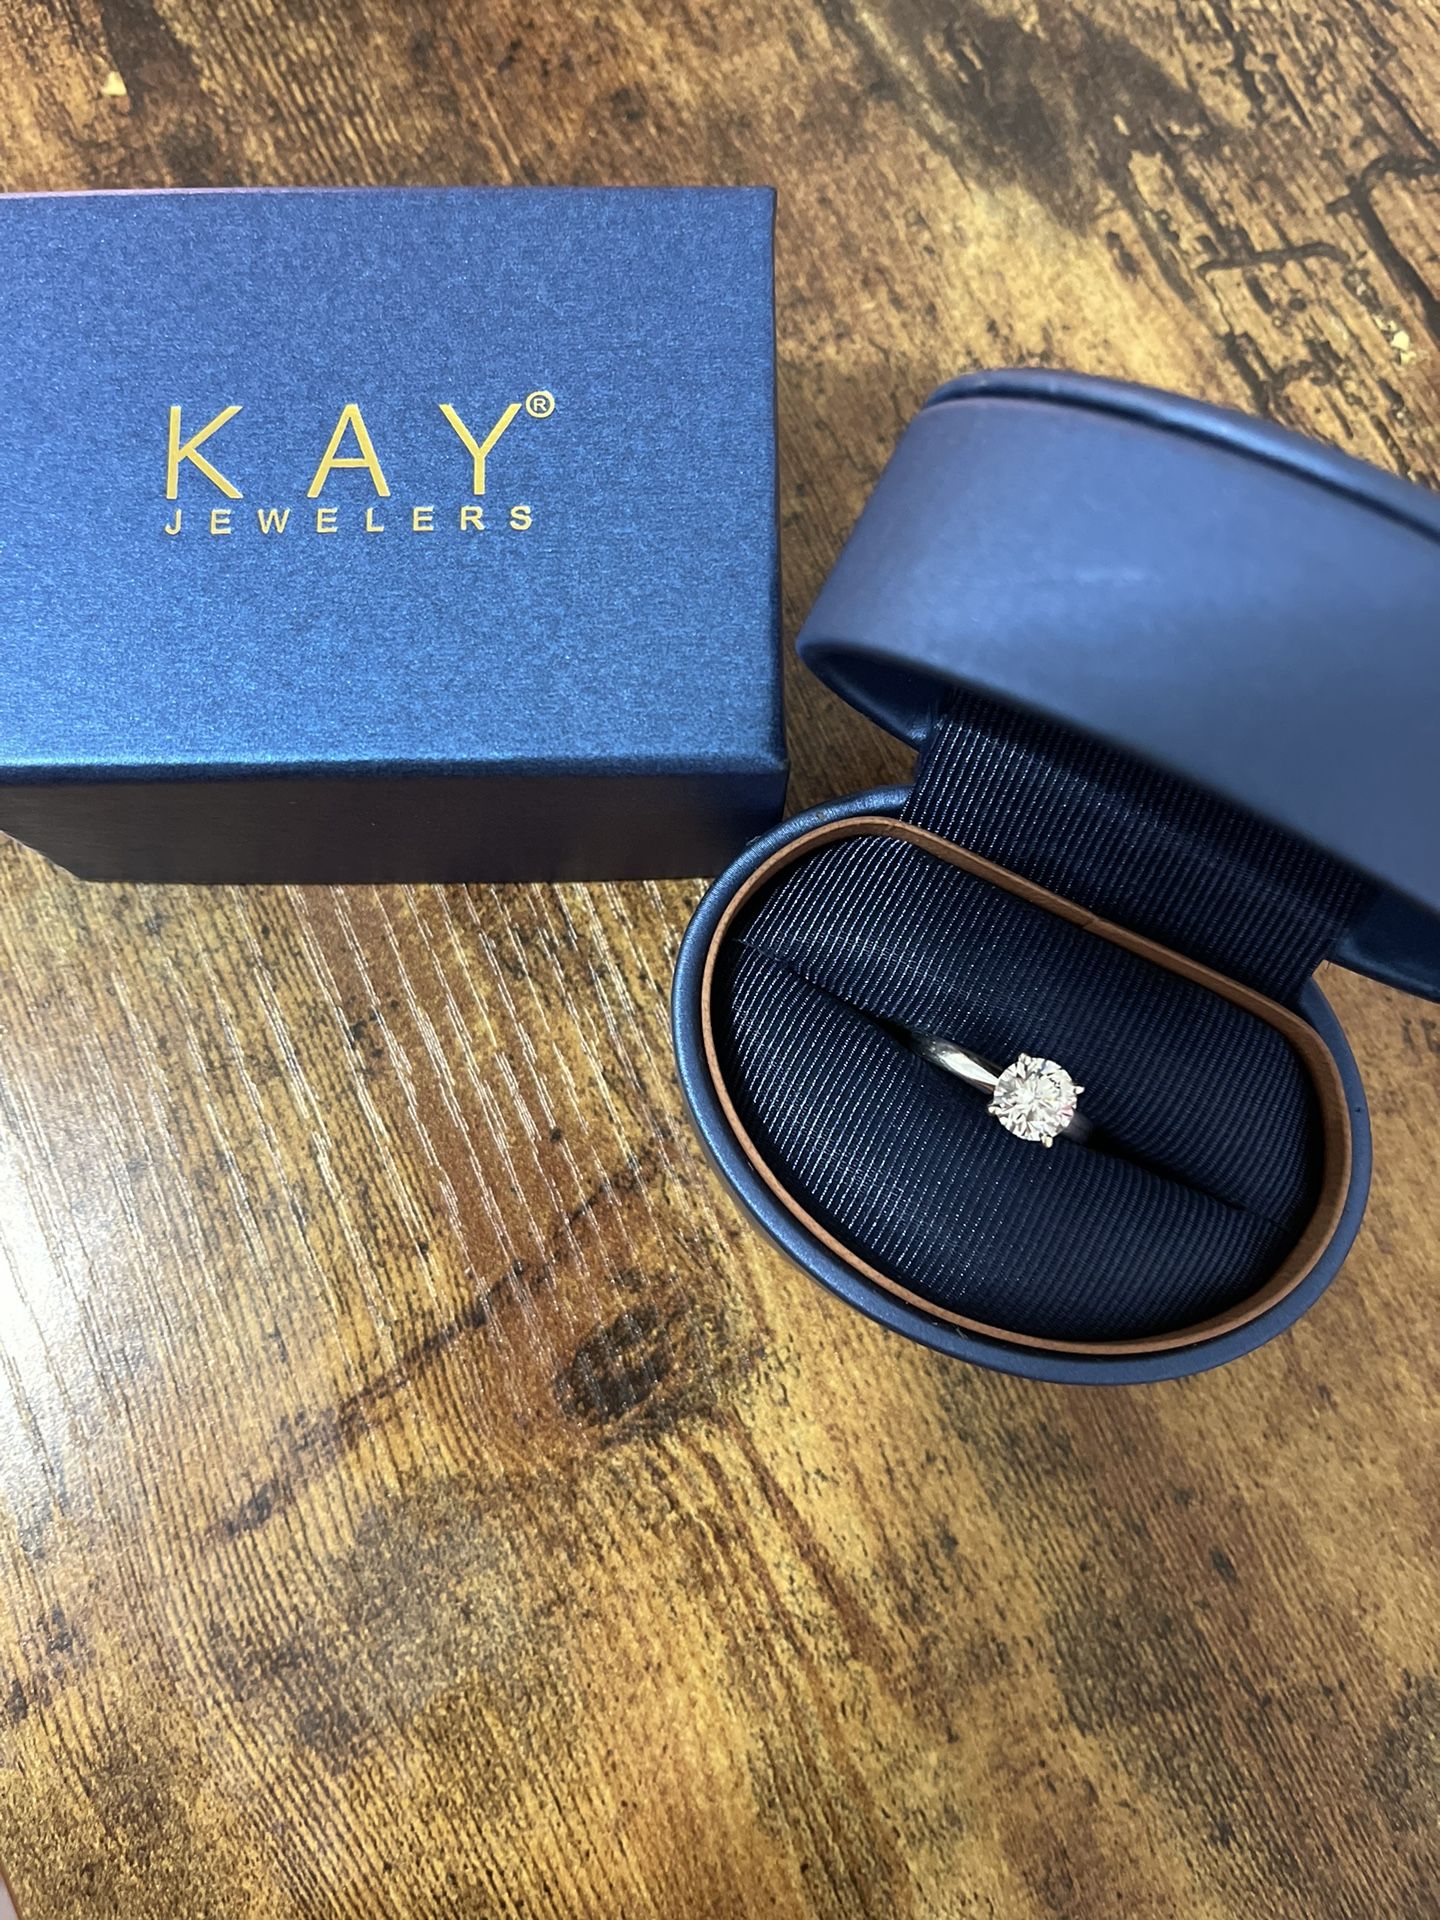 Kay’s Leo Cut Solitaire Diamond 1.48ct